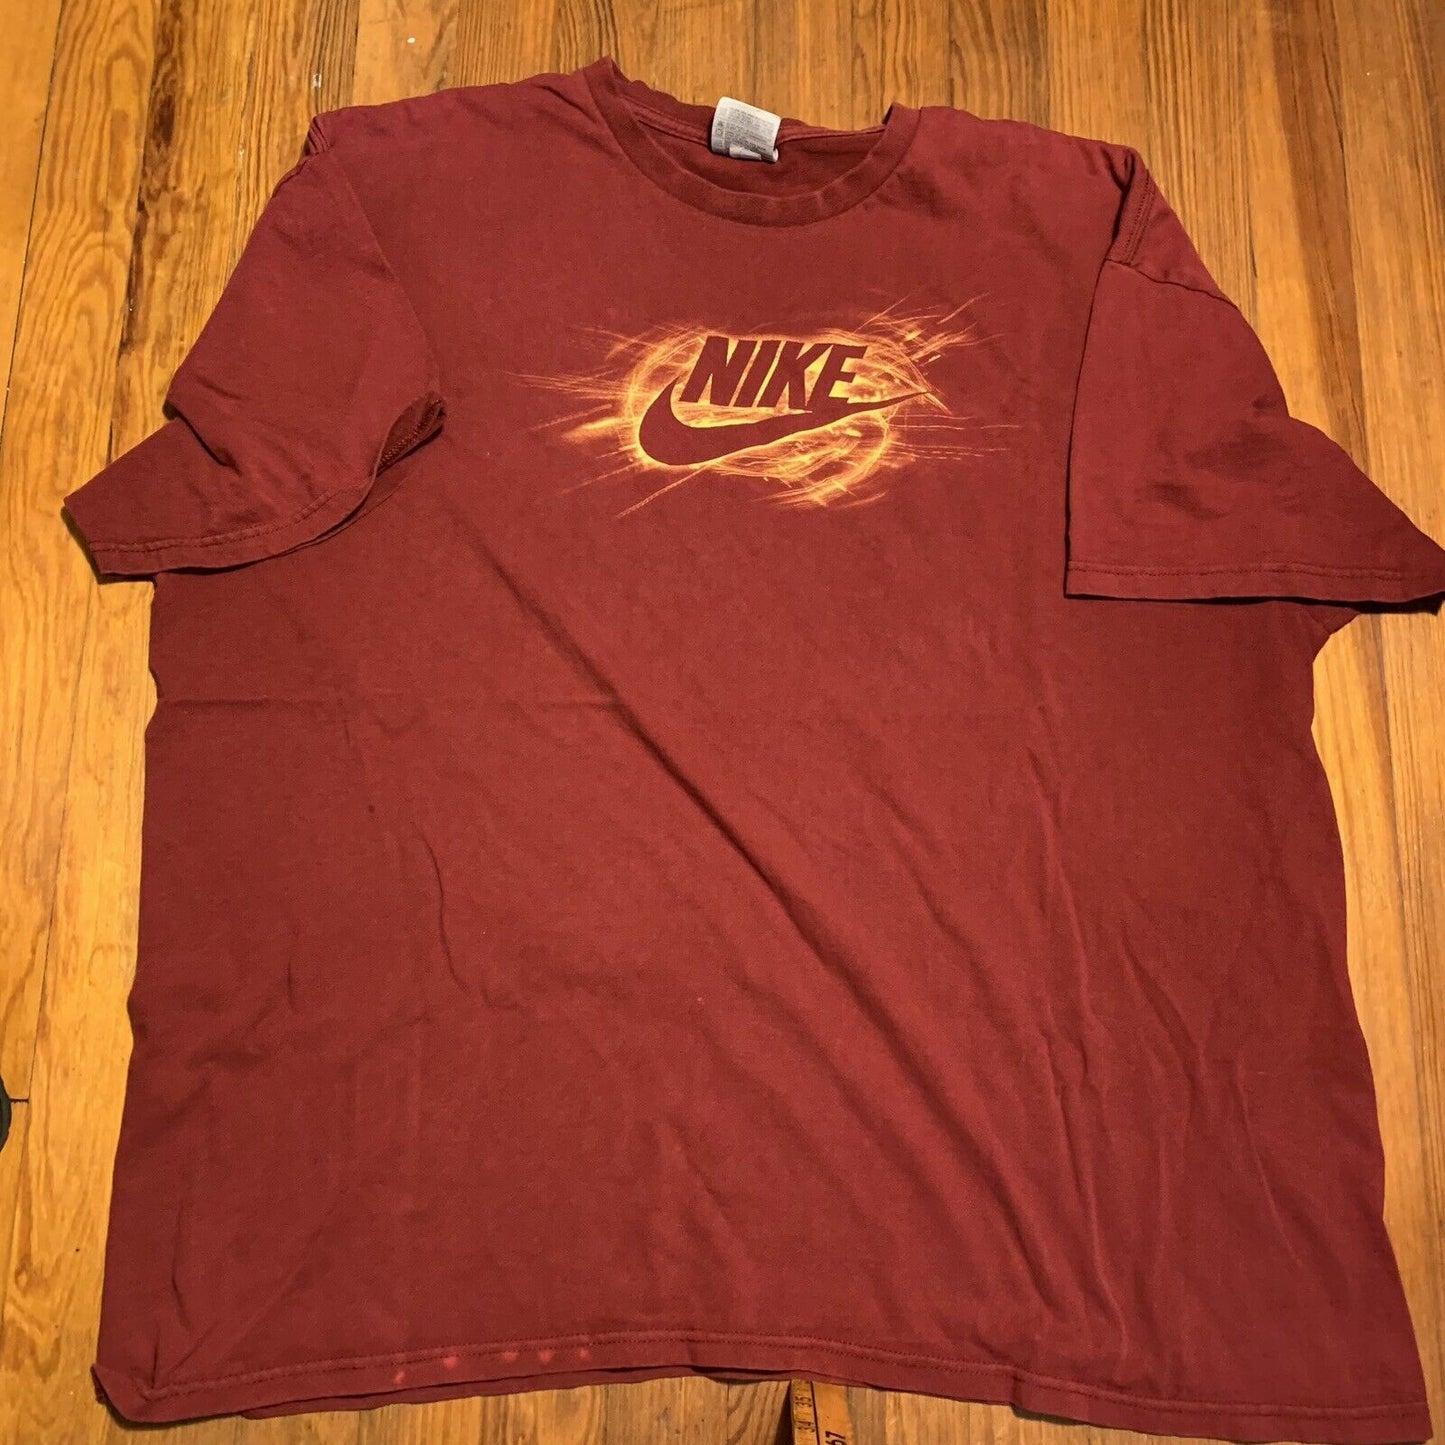 Vintage Nike T Shirt Size Xxl